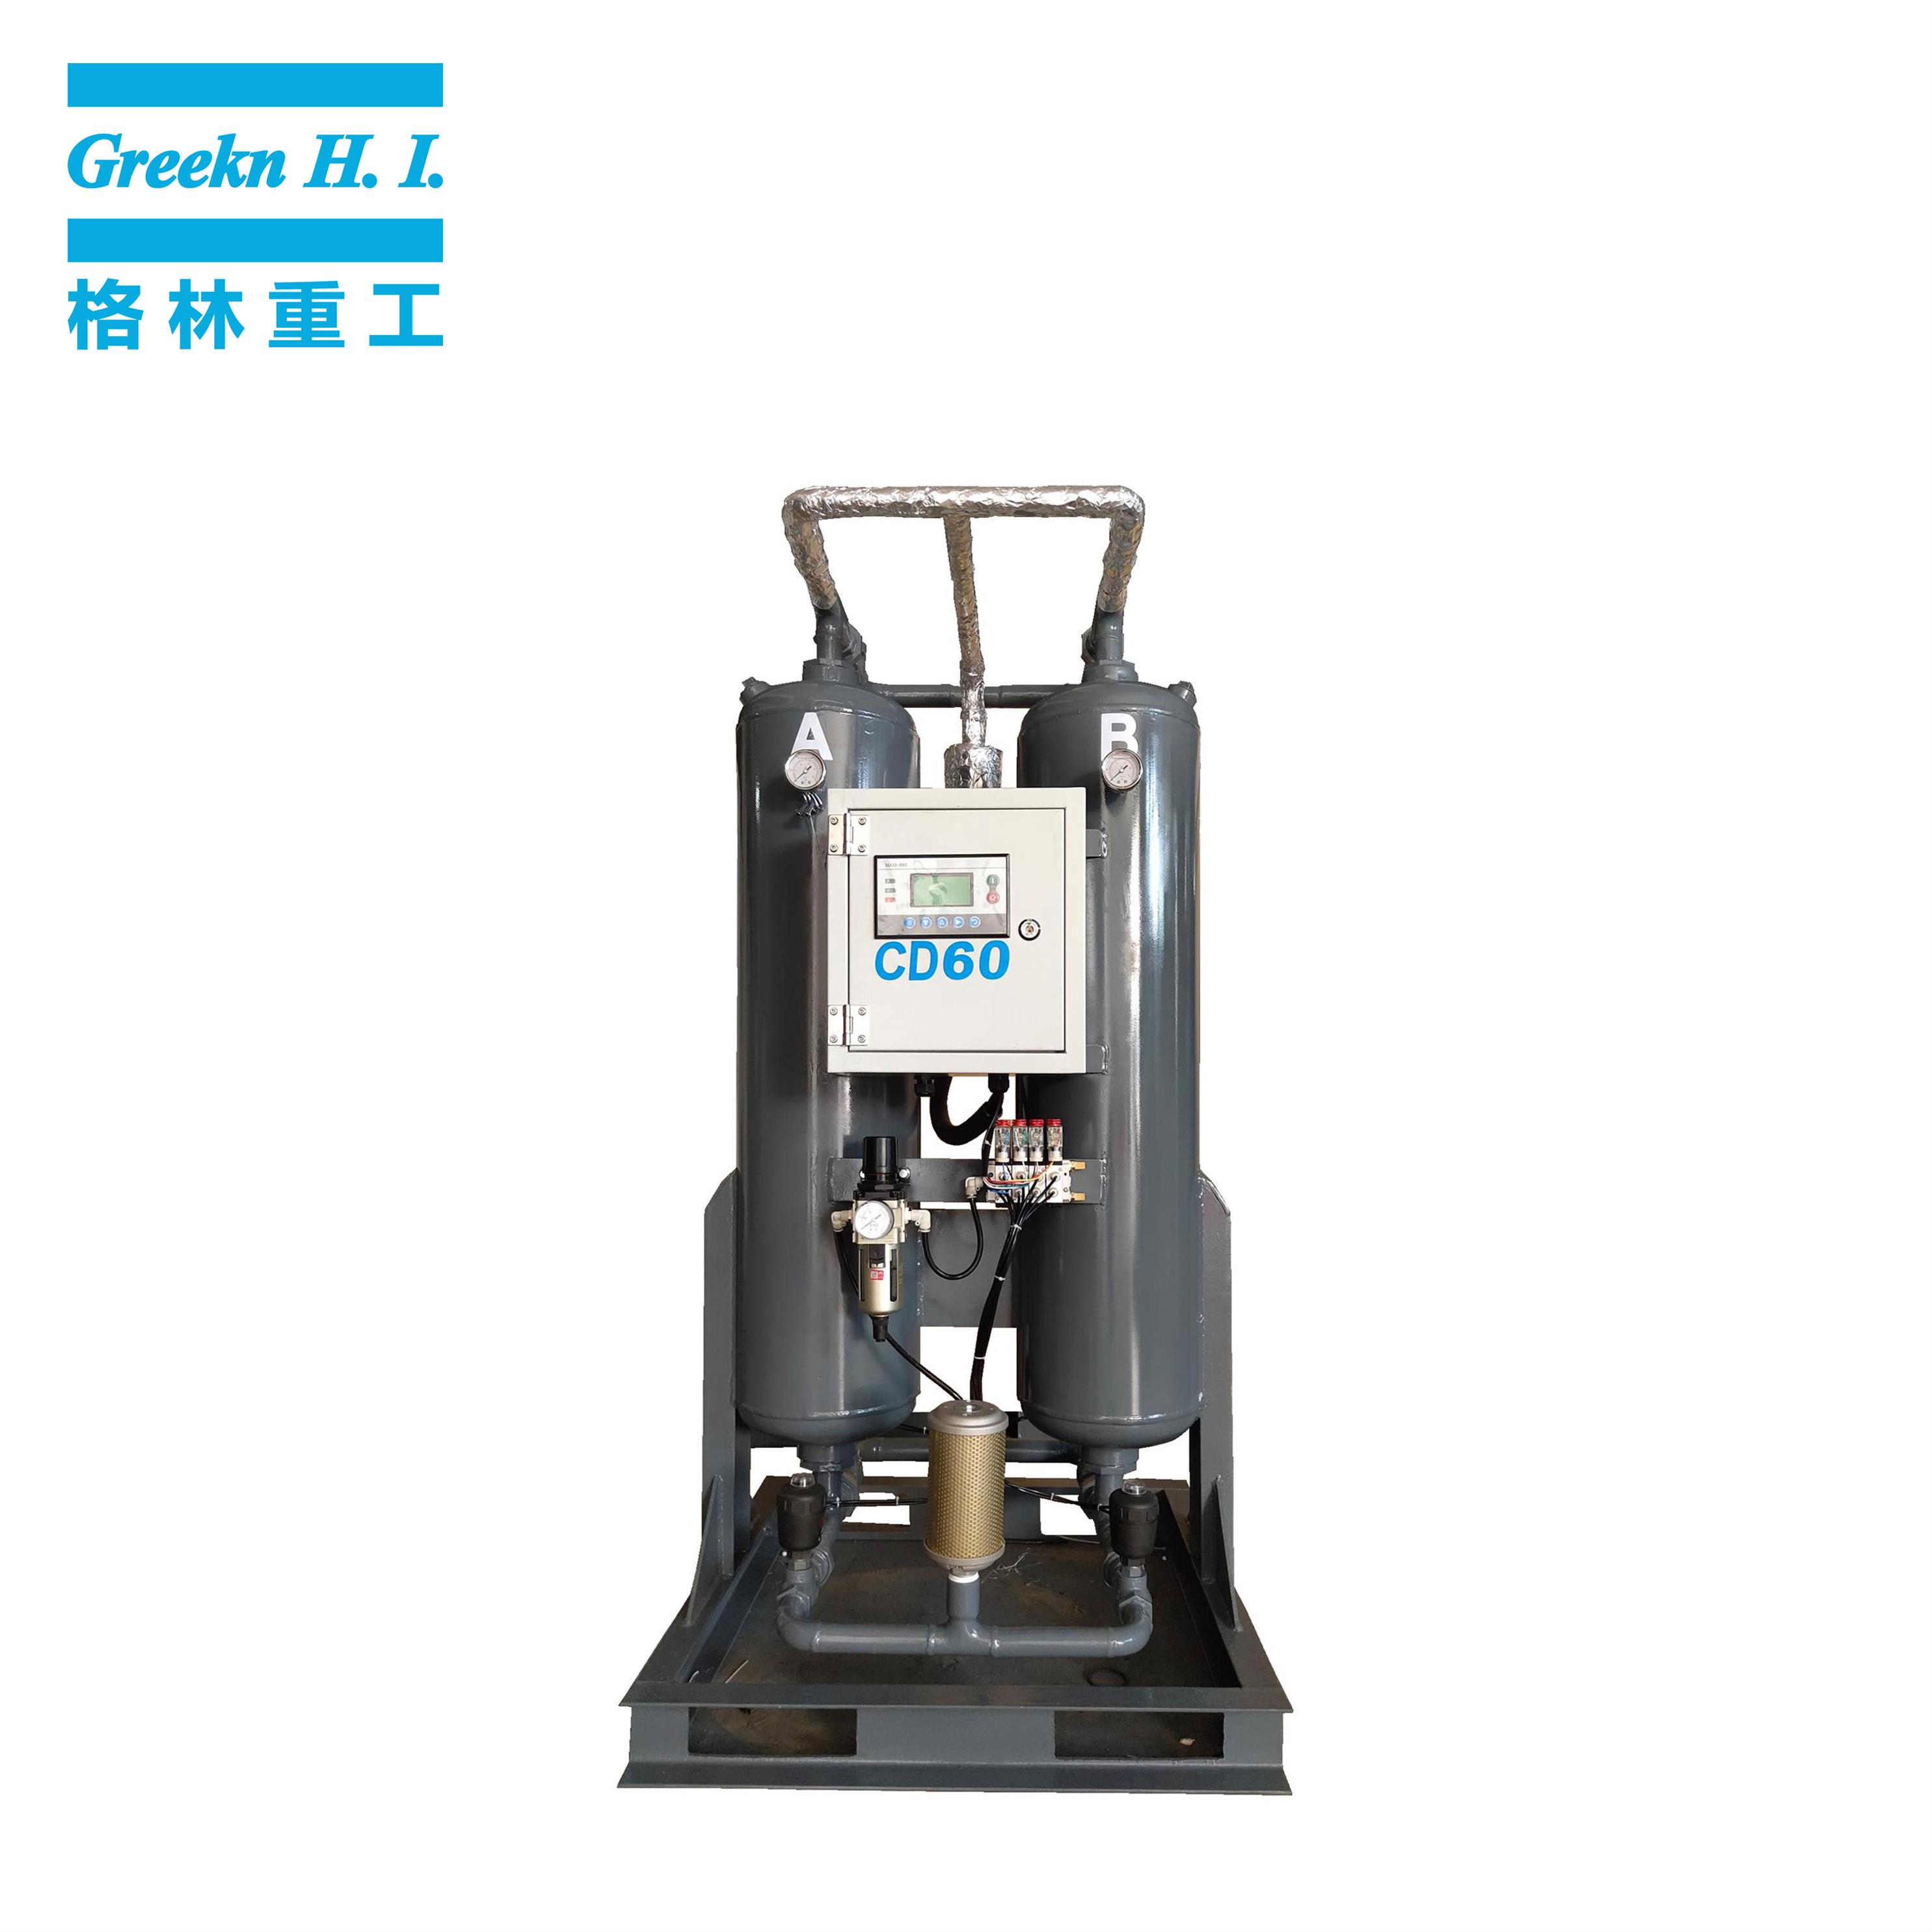 Greenair CD60 8.5m3/min Adsorption Air Dryer Desiccant Air Dryer